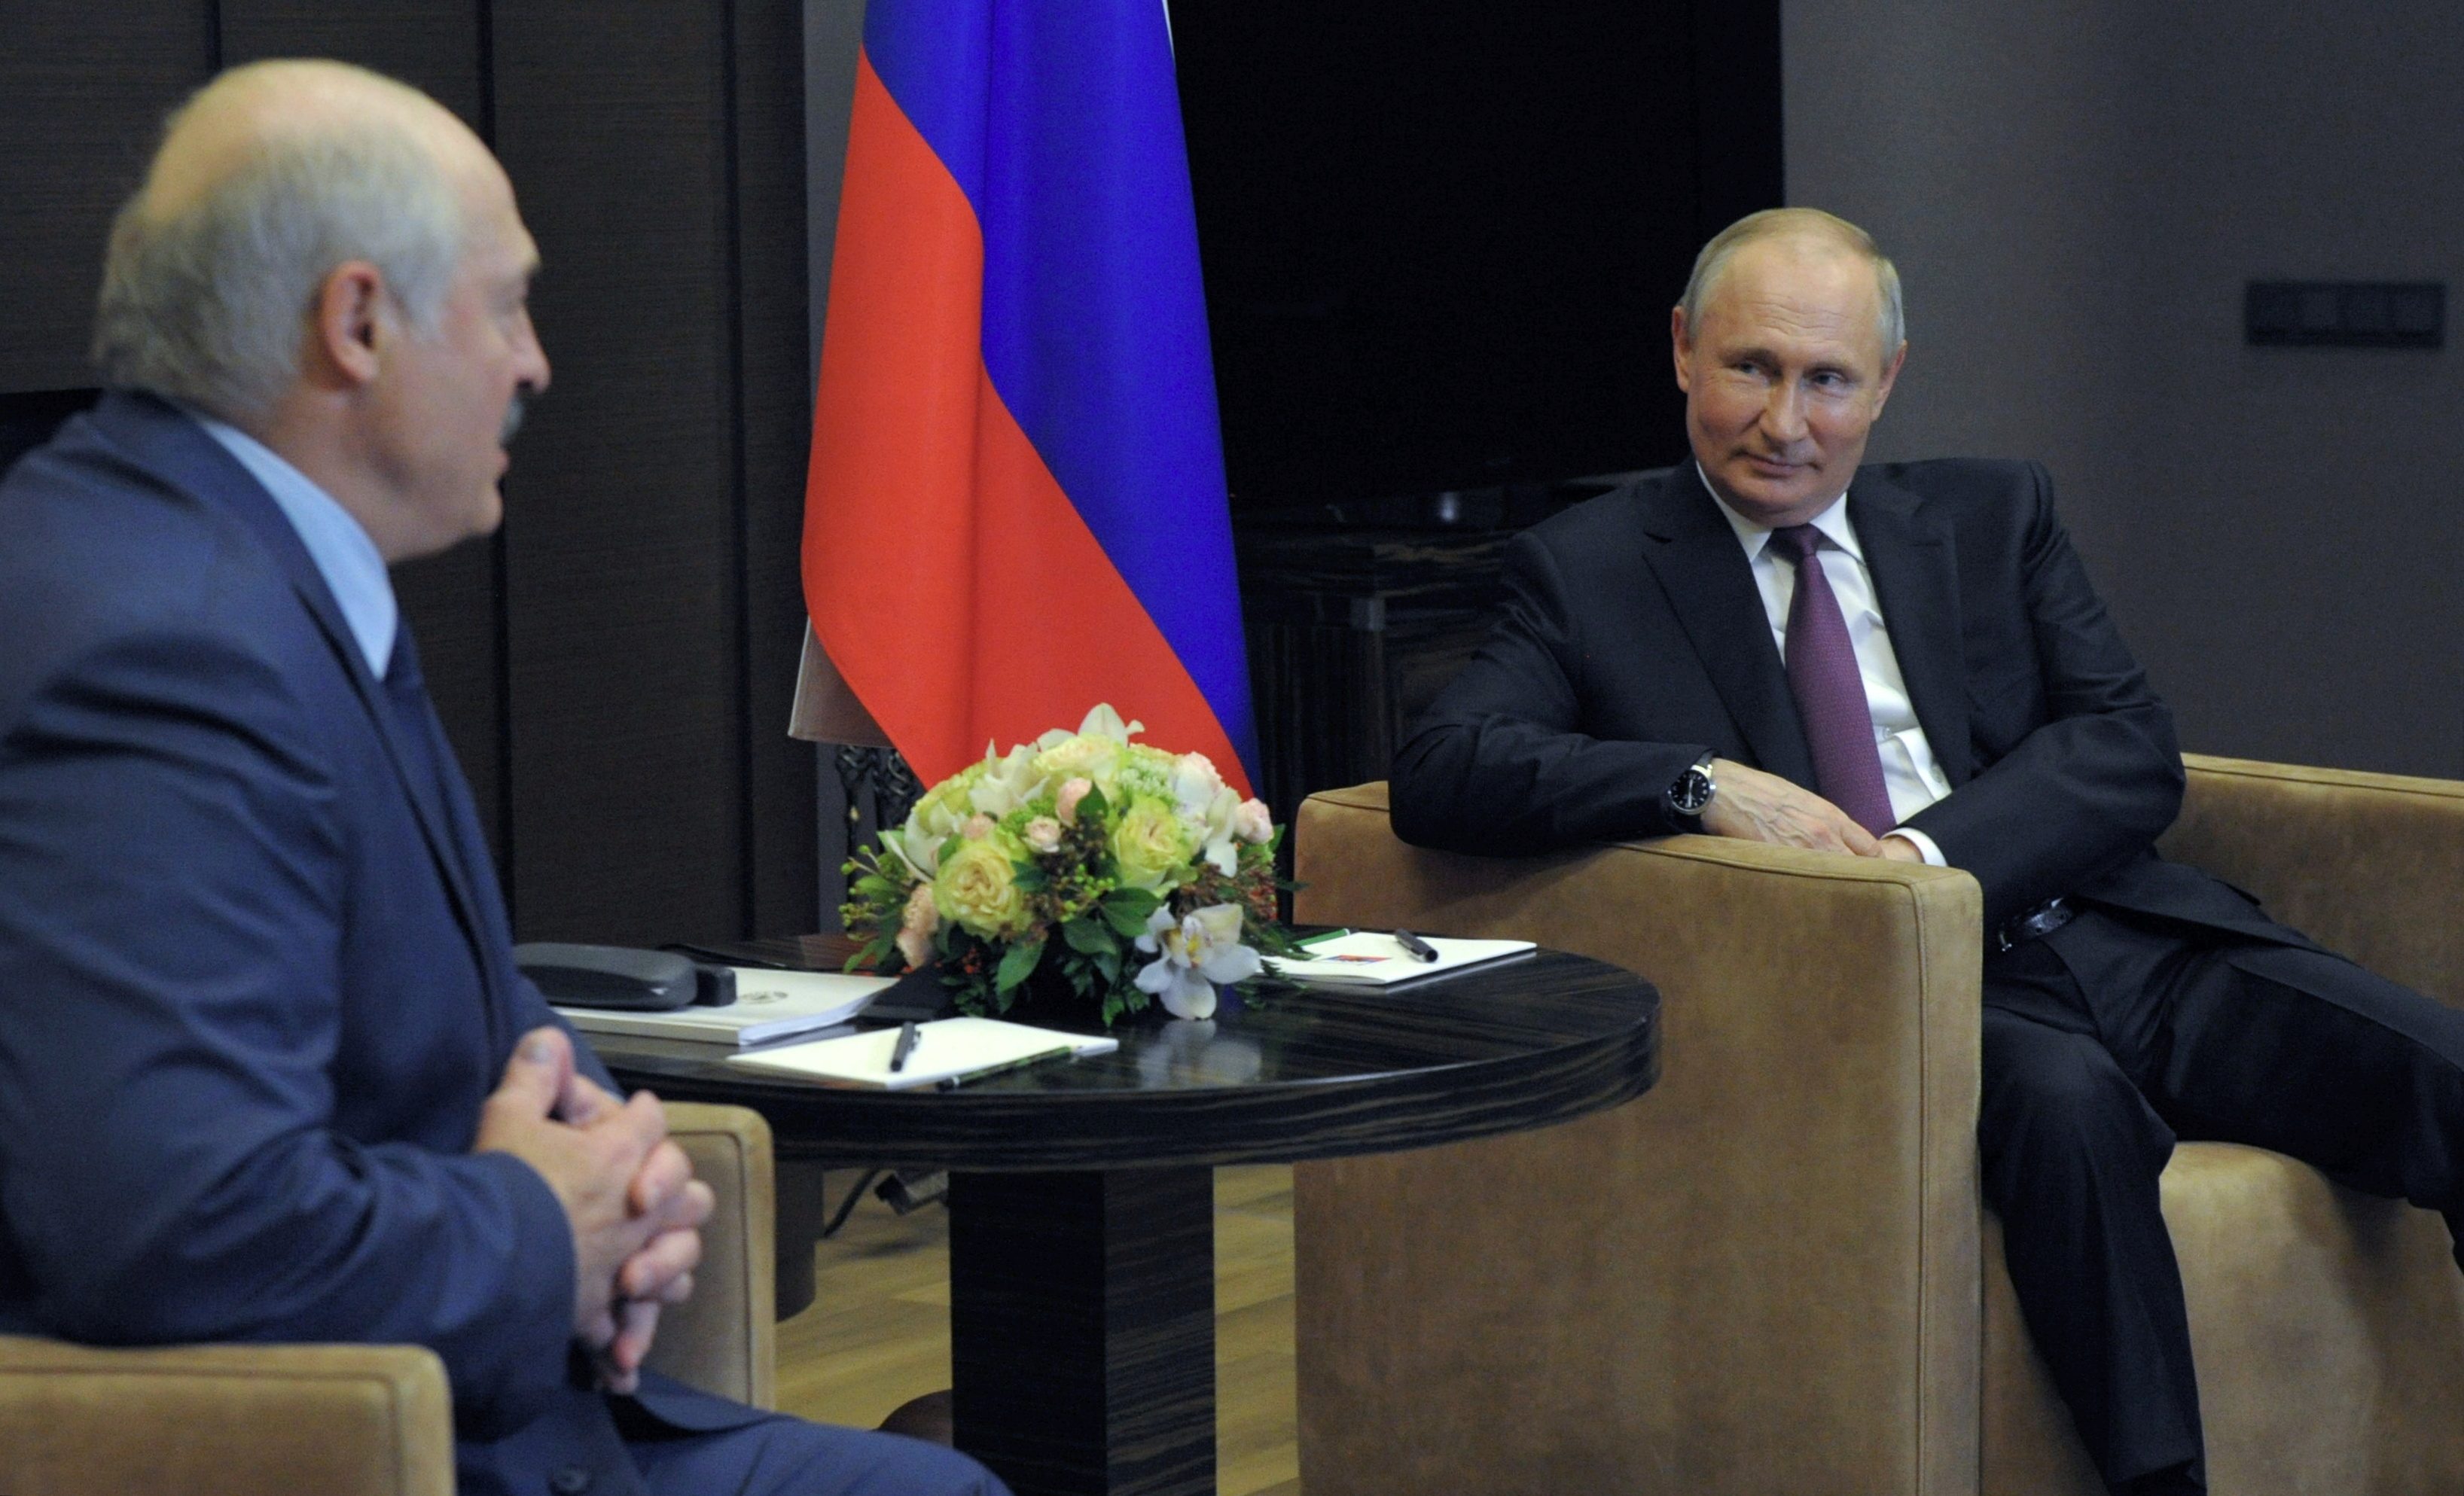 Putin offers Belarus leader support against West in Ryanair plane standoff